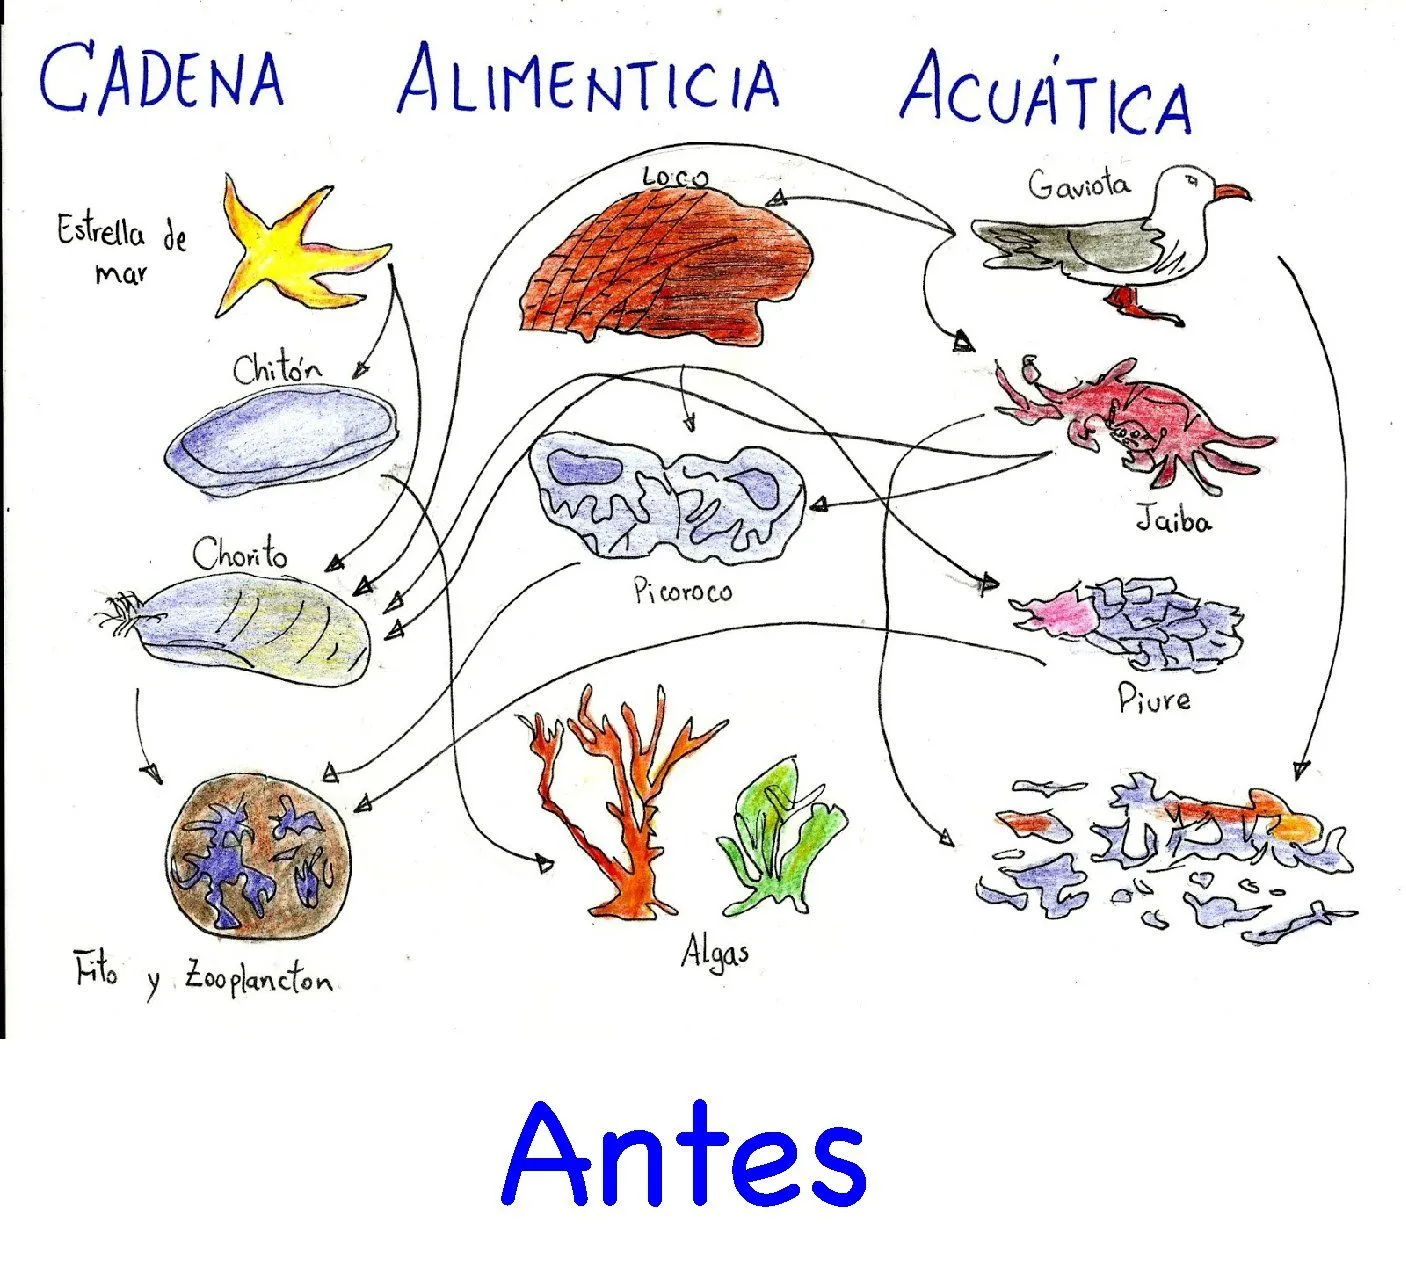 Andrés Ospina @andresospina@fediscience.org on X: 